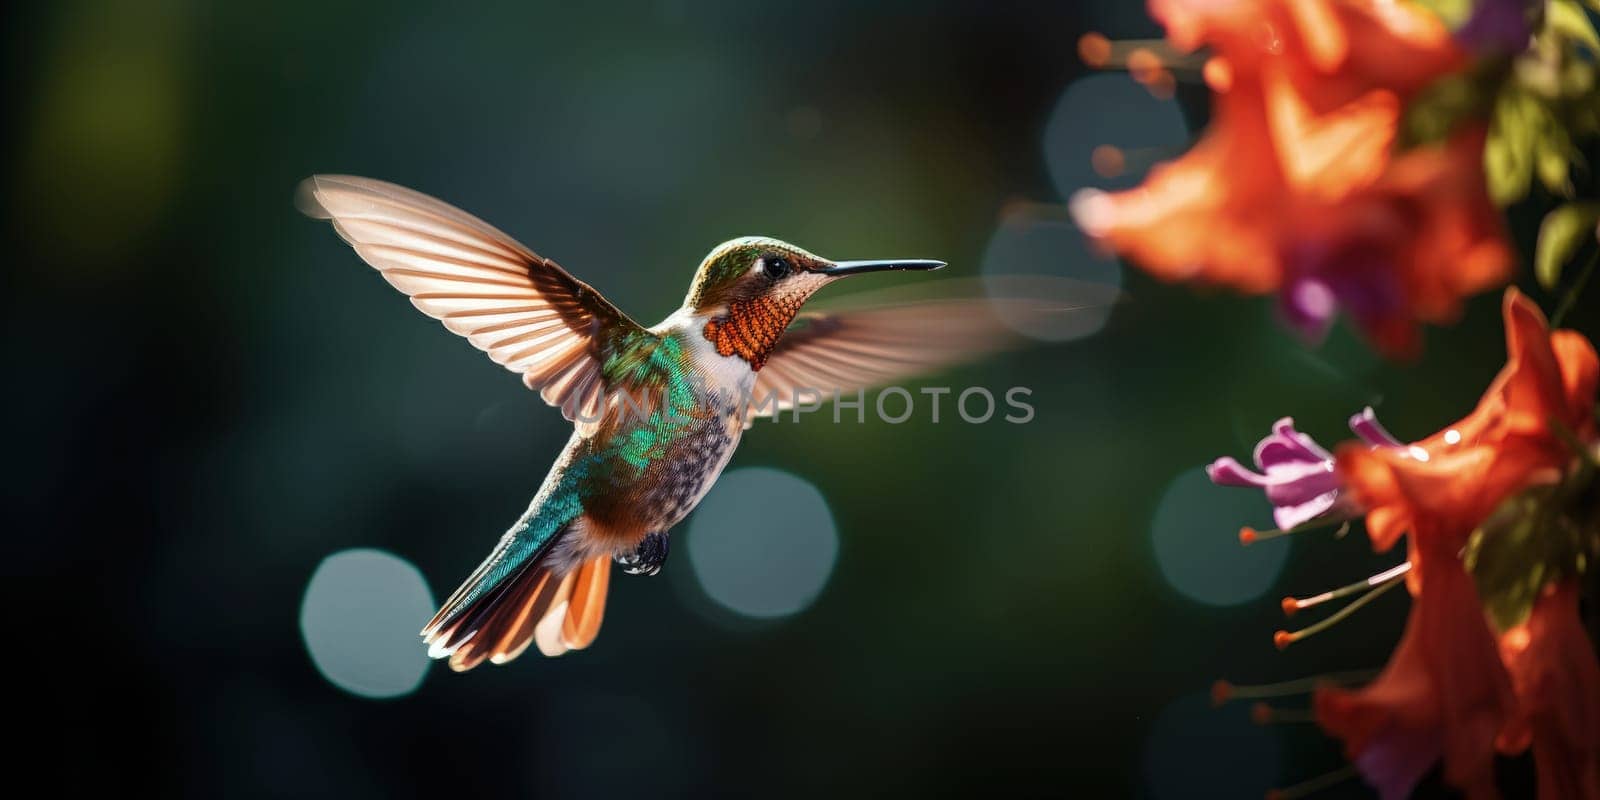 hummingbird in flight, wings oscillating in frozen moment of motion